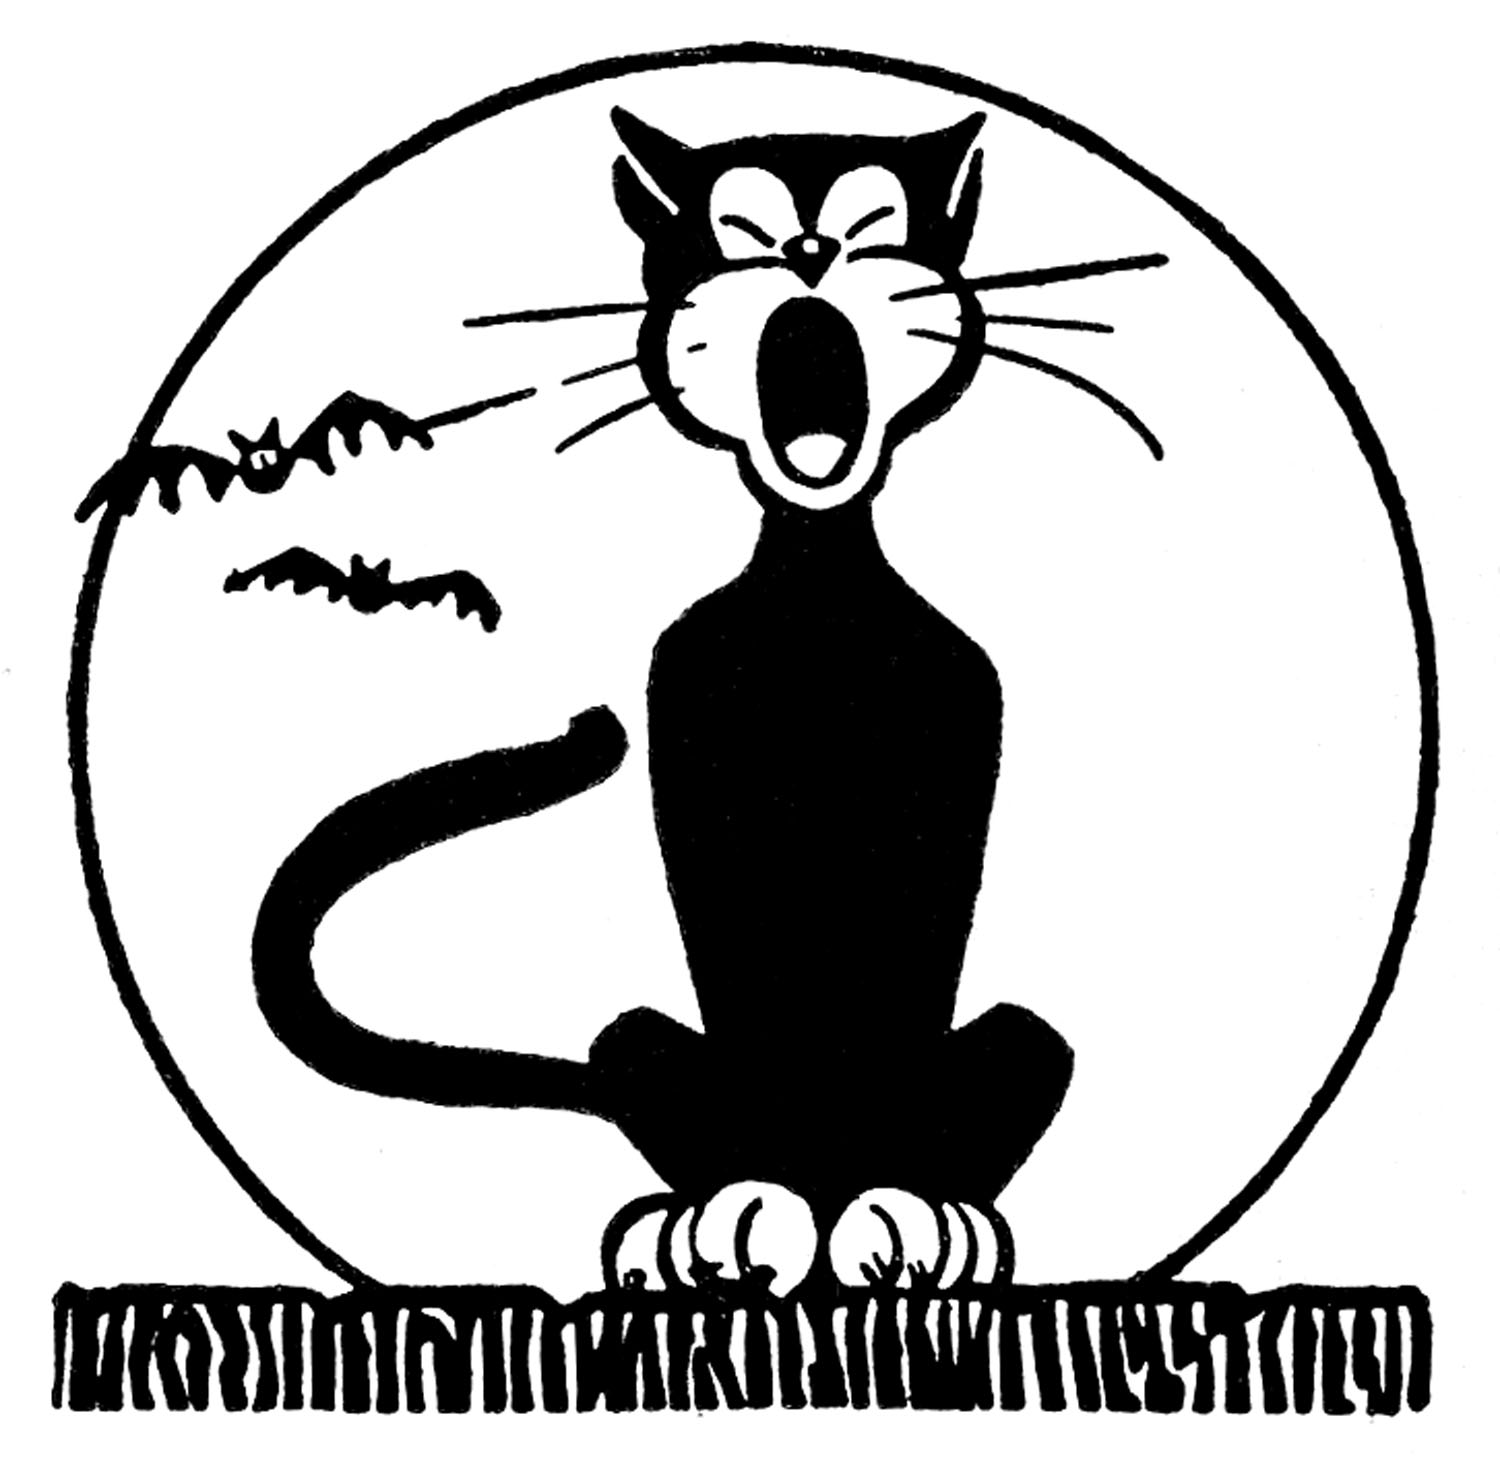 Retro Halloween Clip Art   Black Cat With Moon   The Graphics Fairy